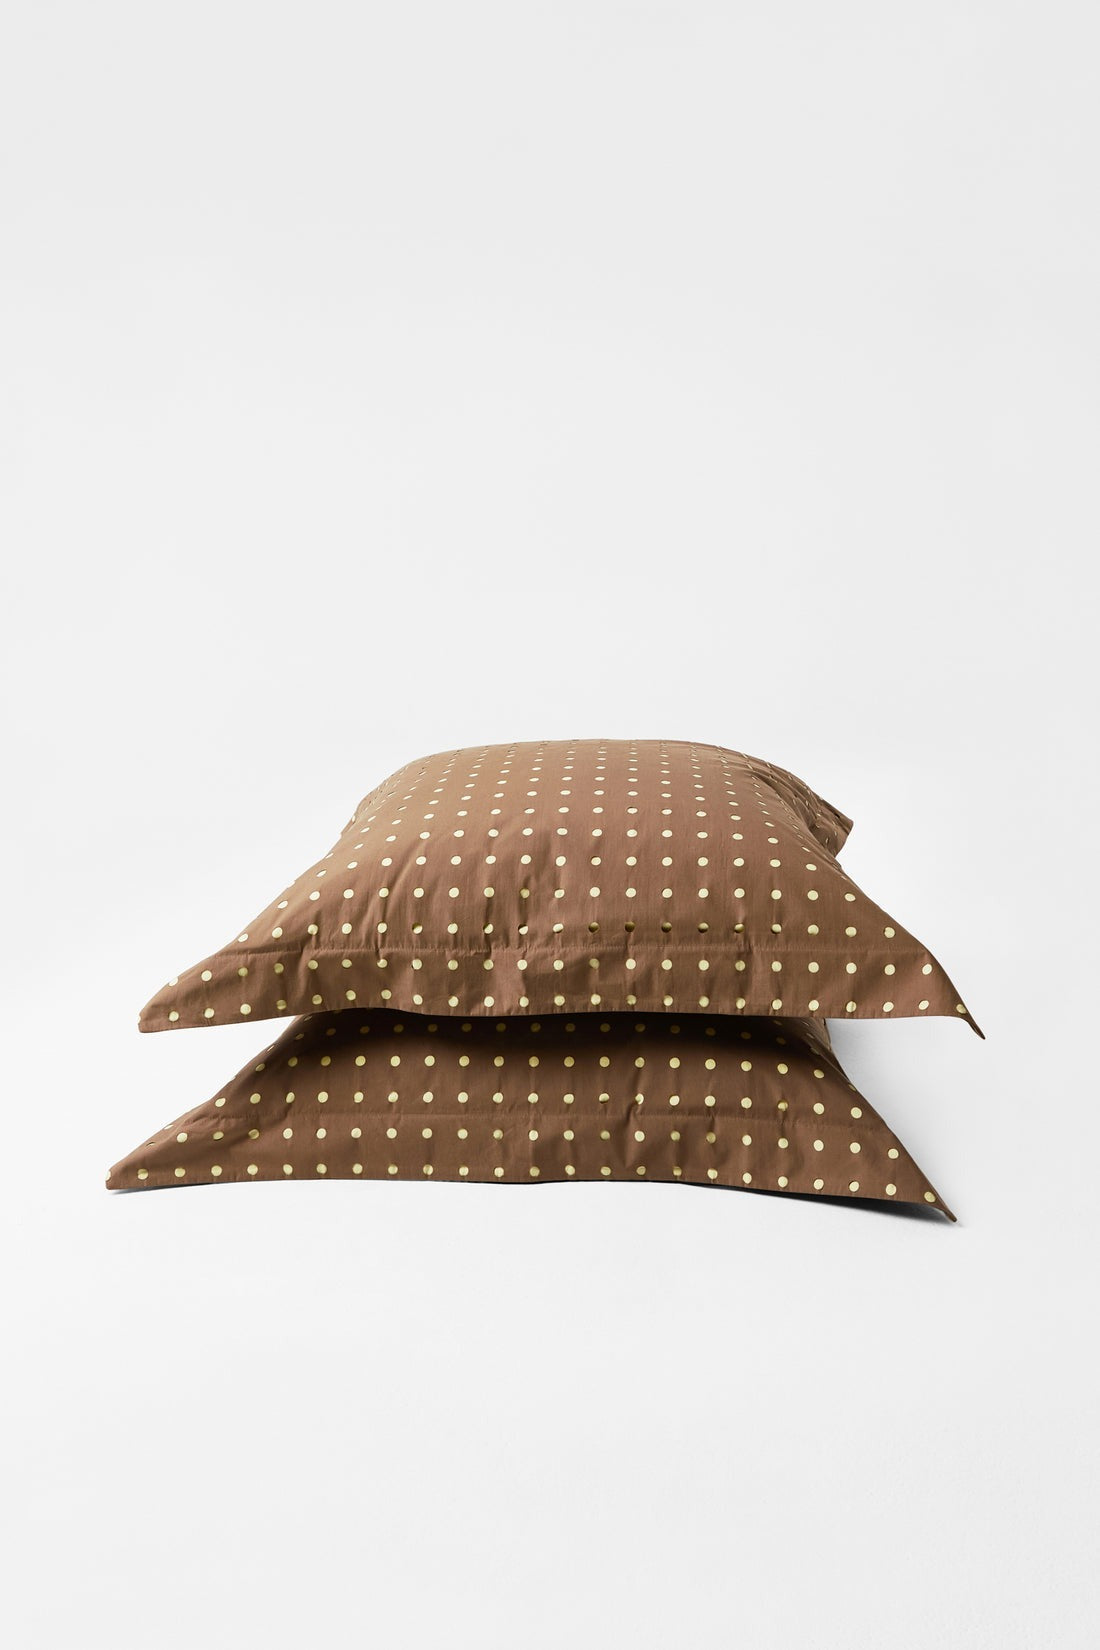 Punch Card Organic Cotton Percale Pillow Pair - Carob with Sulphur Pillows in Euro Pillow